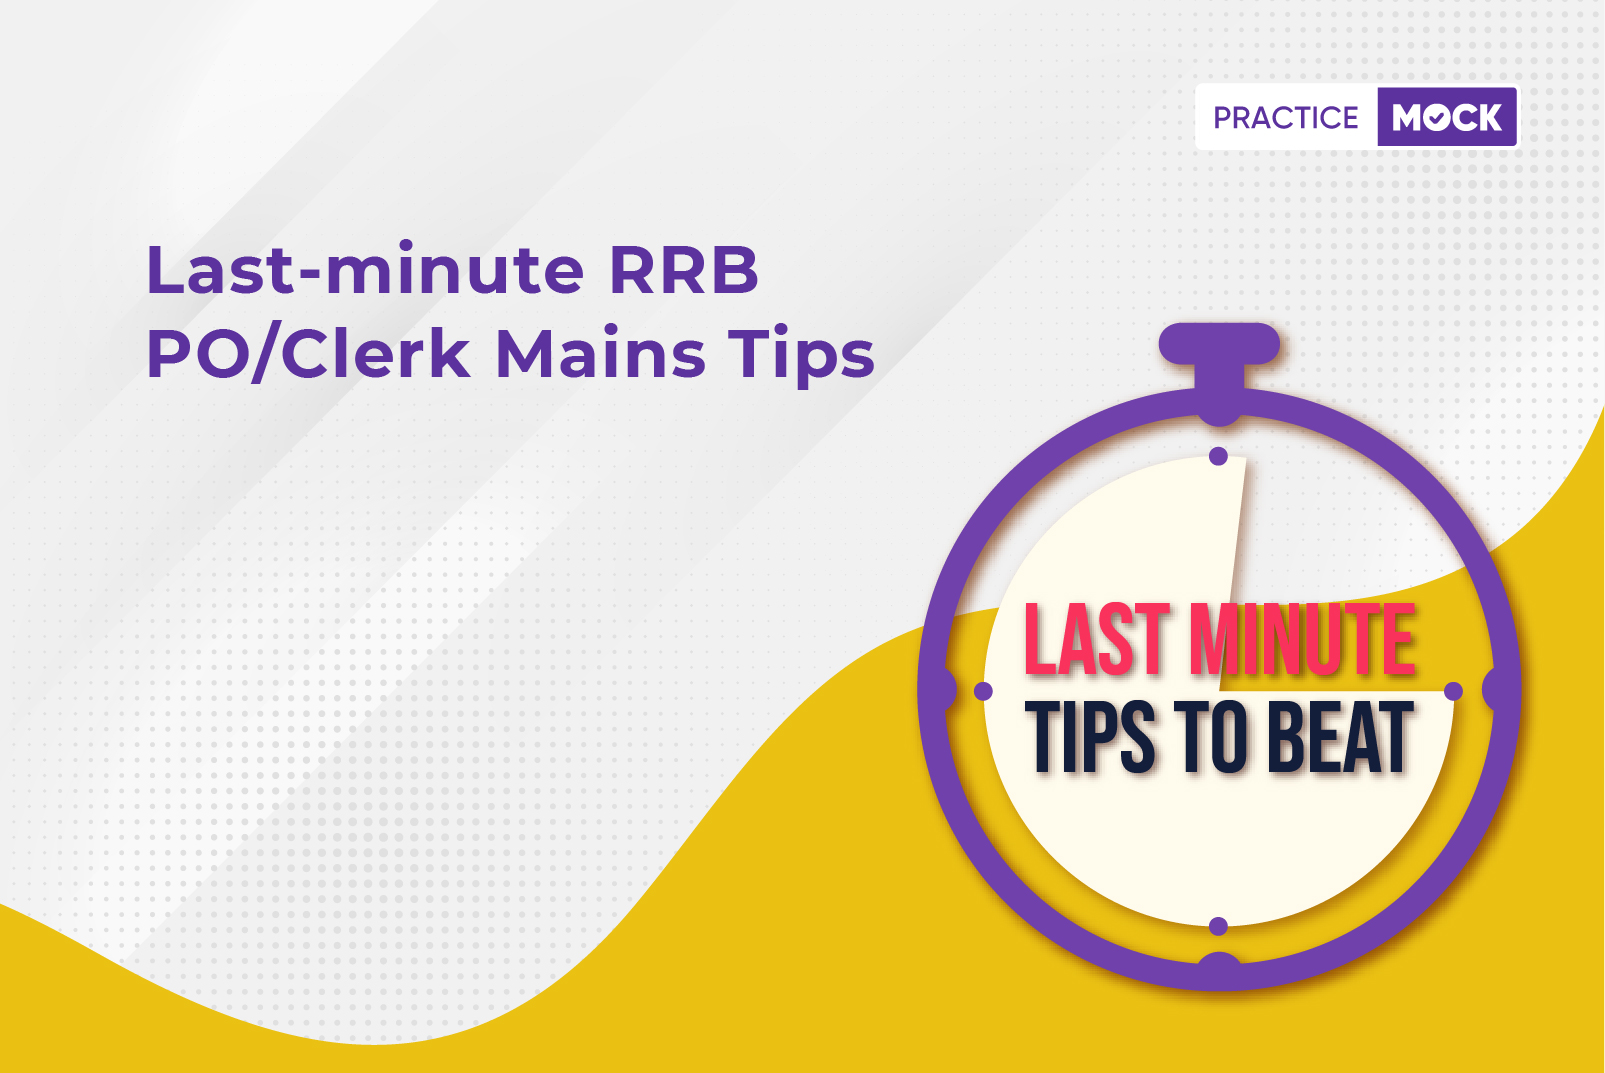 Last-minute RRB PO:Clerk Mains Tips